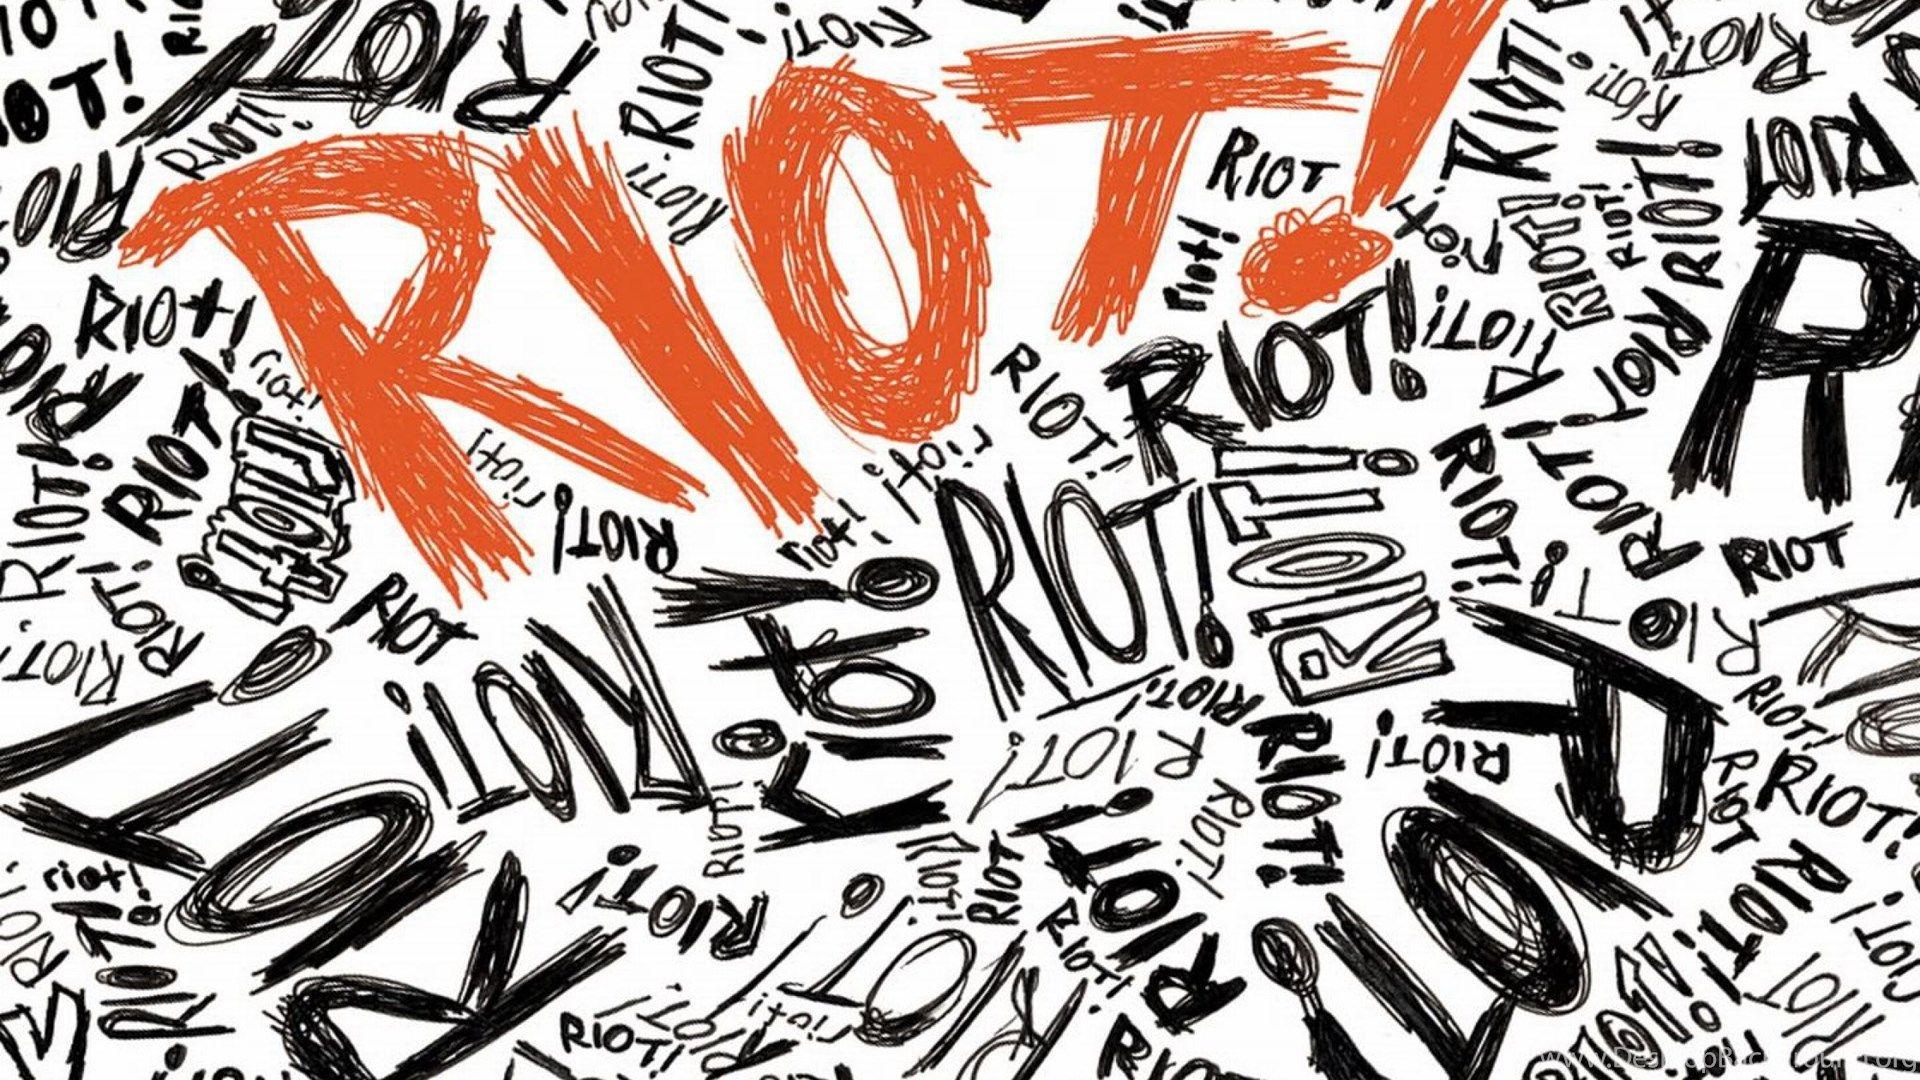 Riot! - Album by Paramore